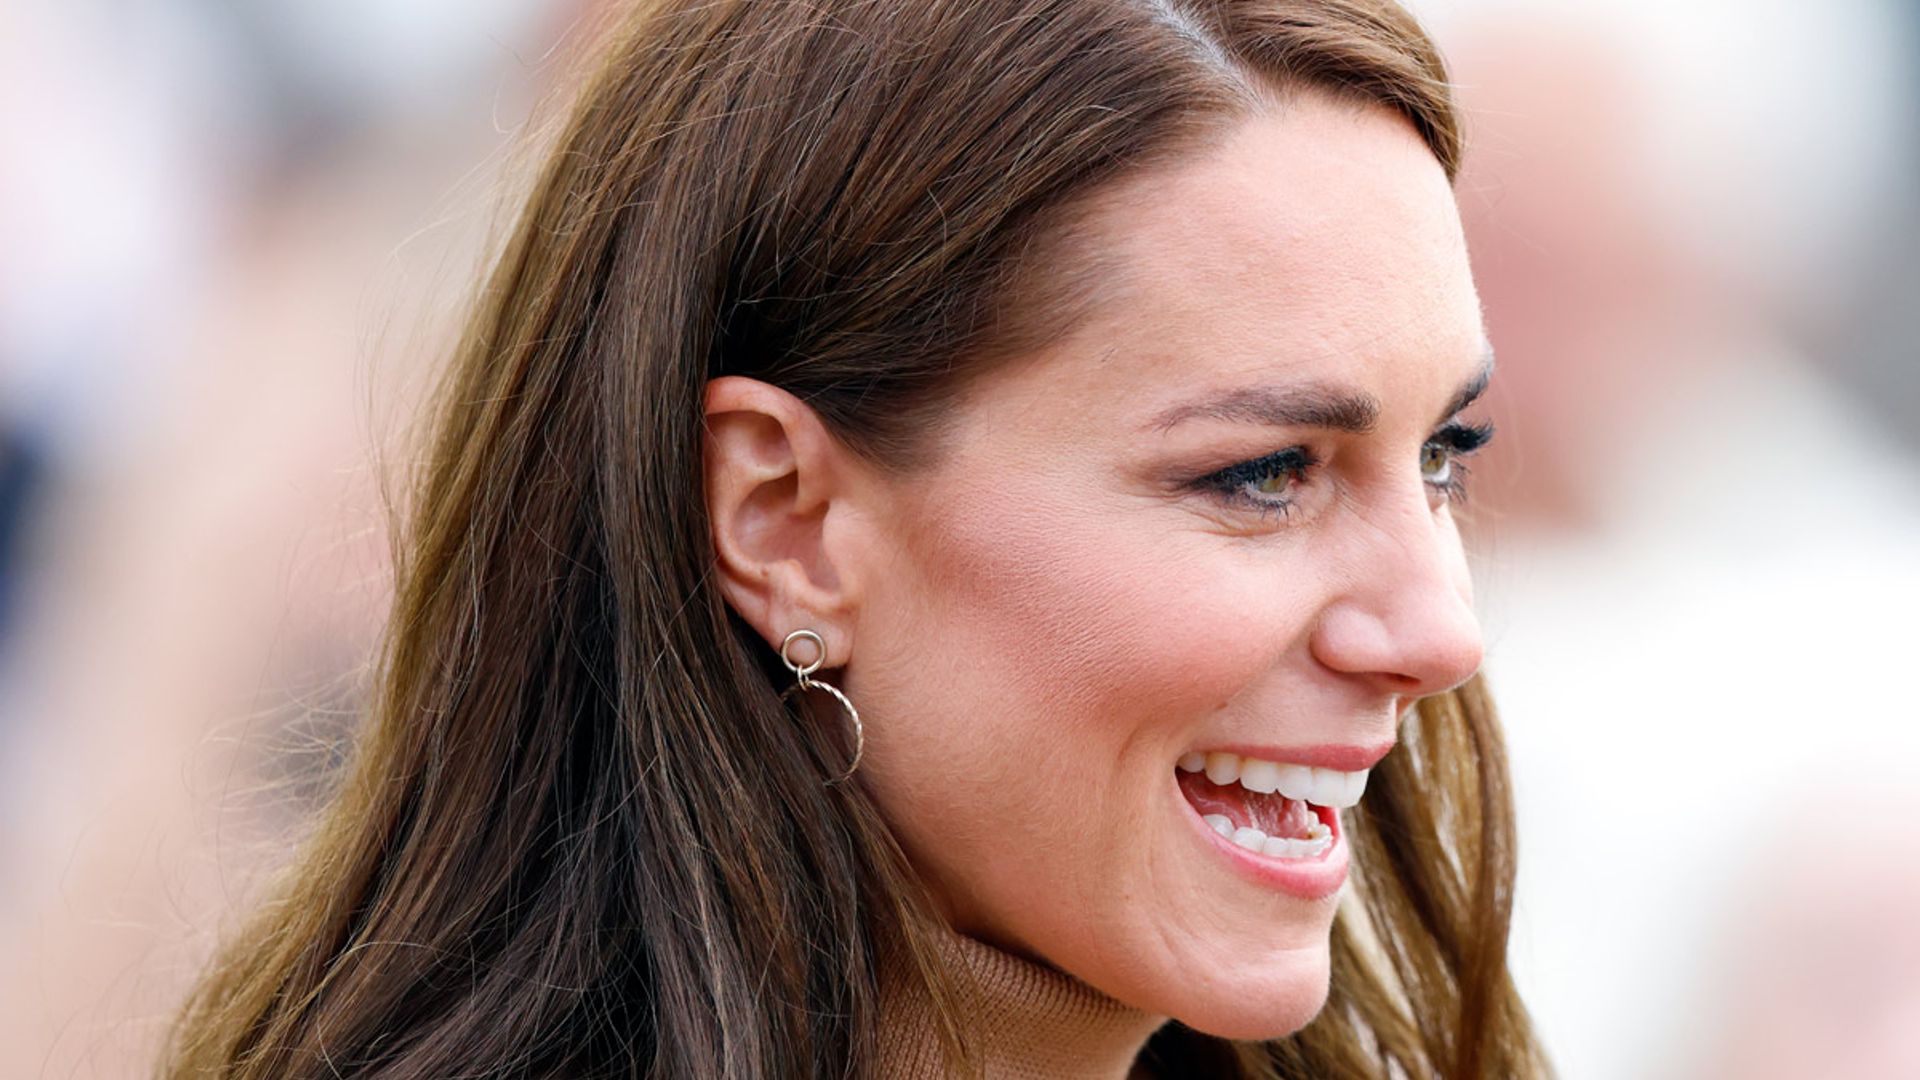 The Princess of Wales' new ponytail has got everyone talking